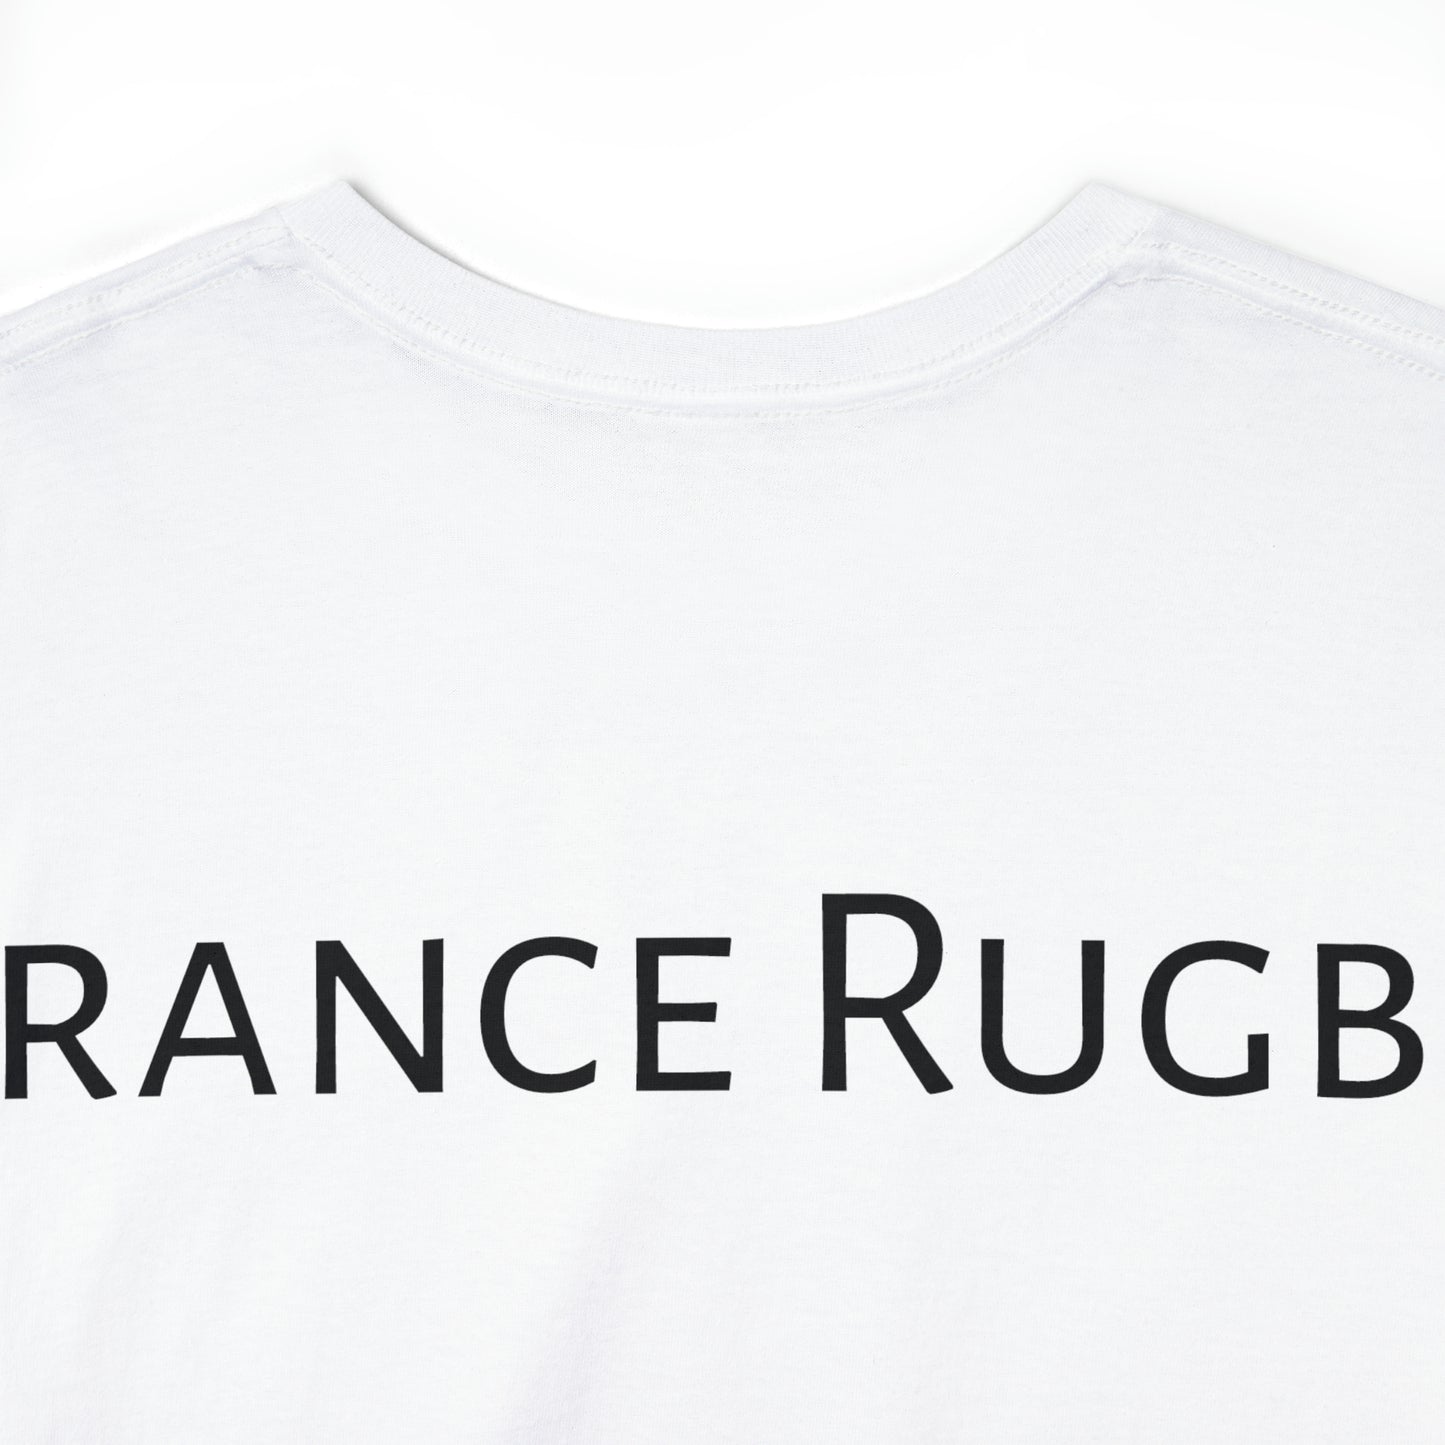 France Winning RWC 2023 - light shirts